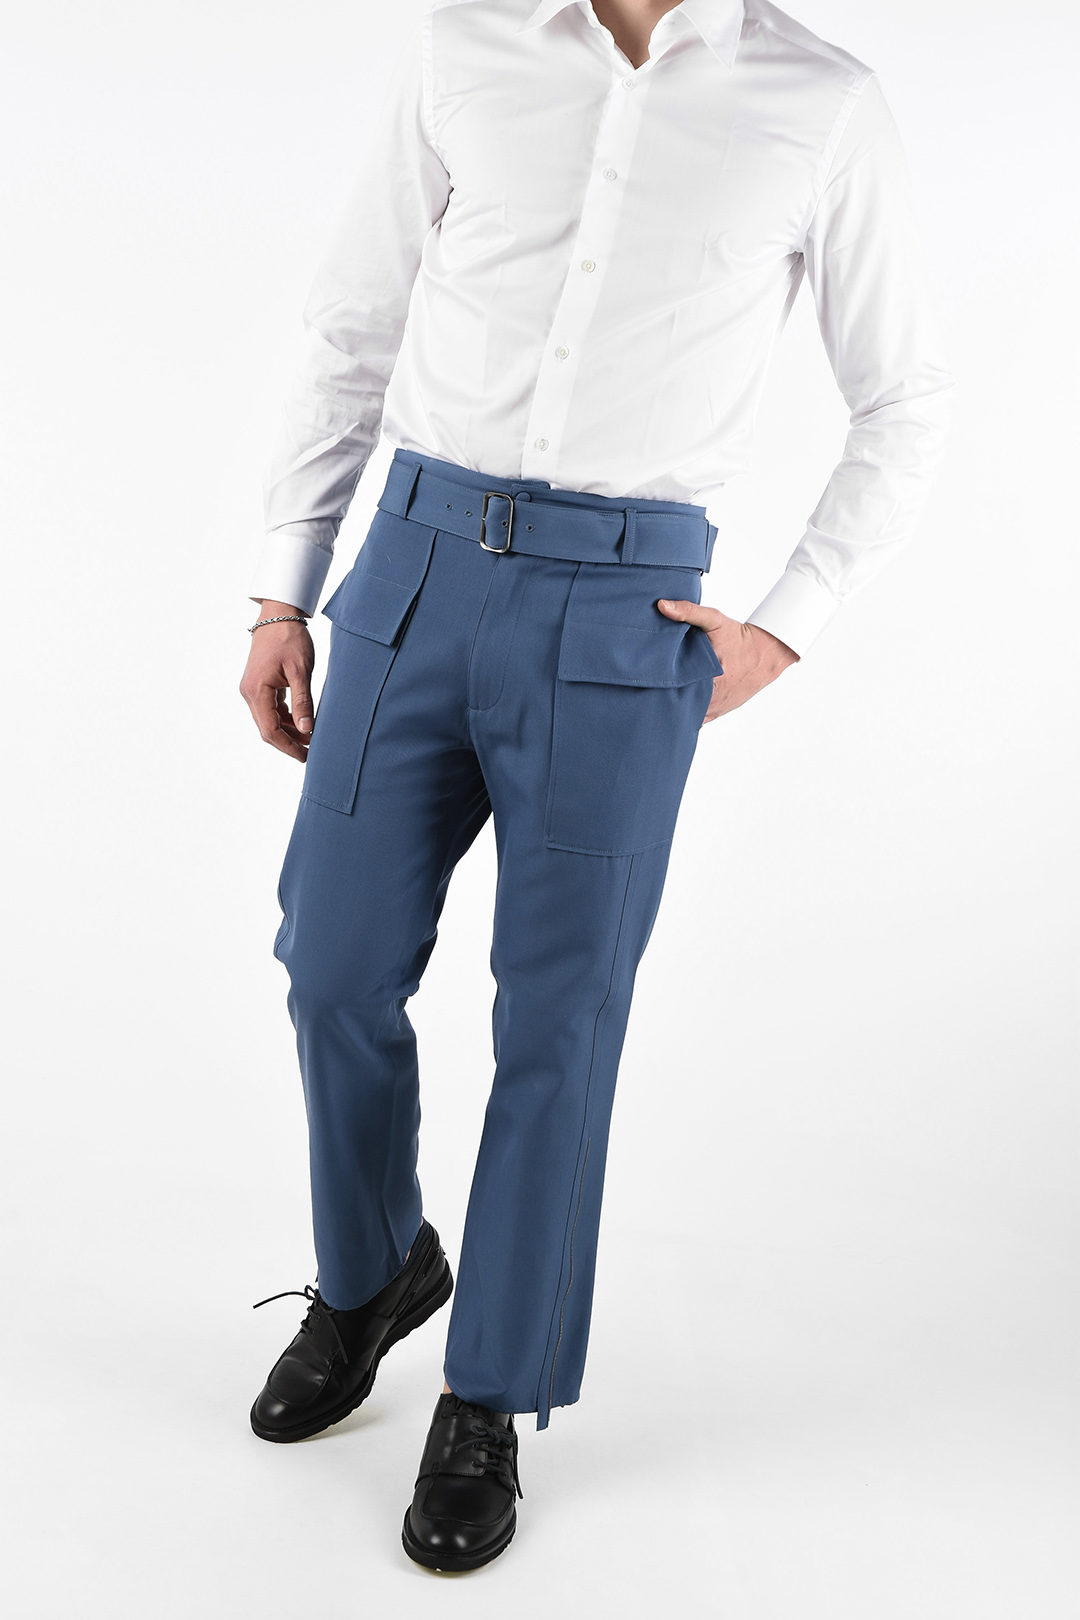 Salvatore Ferragamo Cargo Pants with Belt men - Glamood Outlet